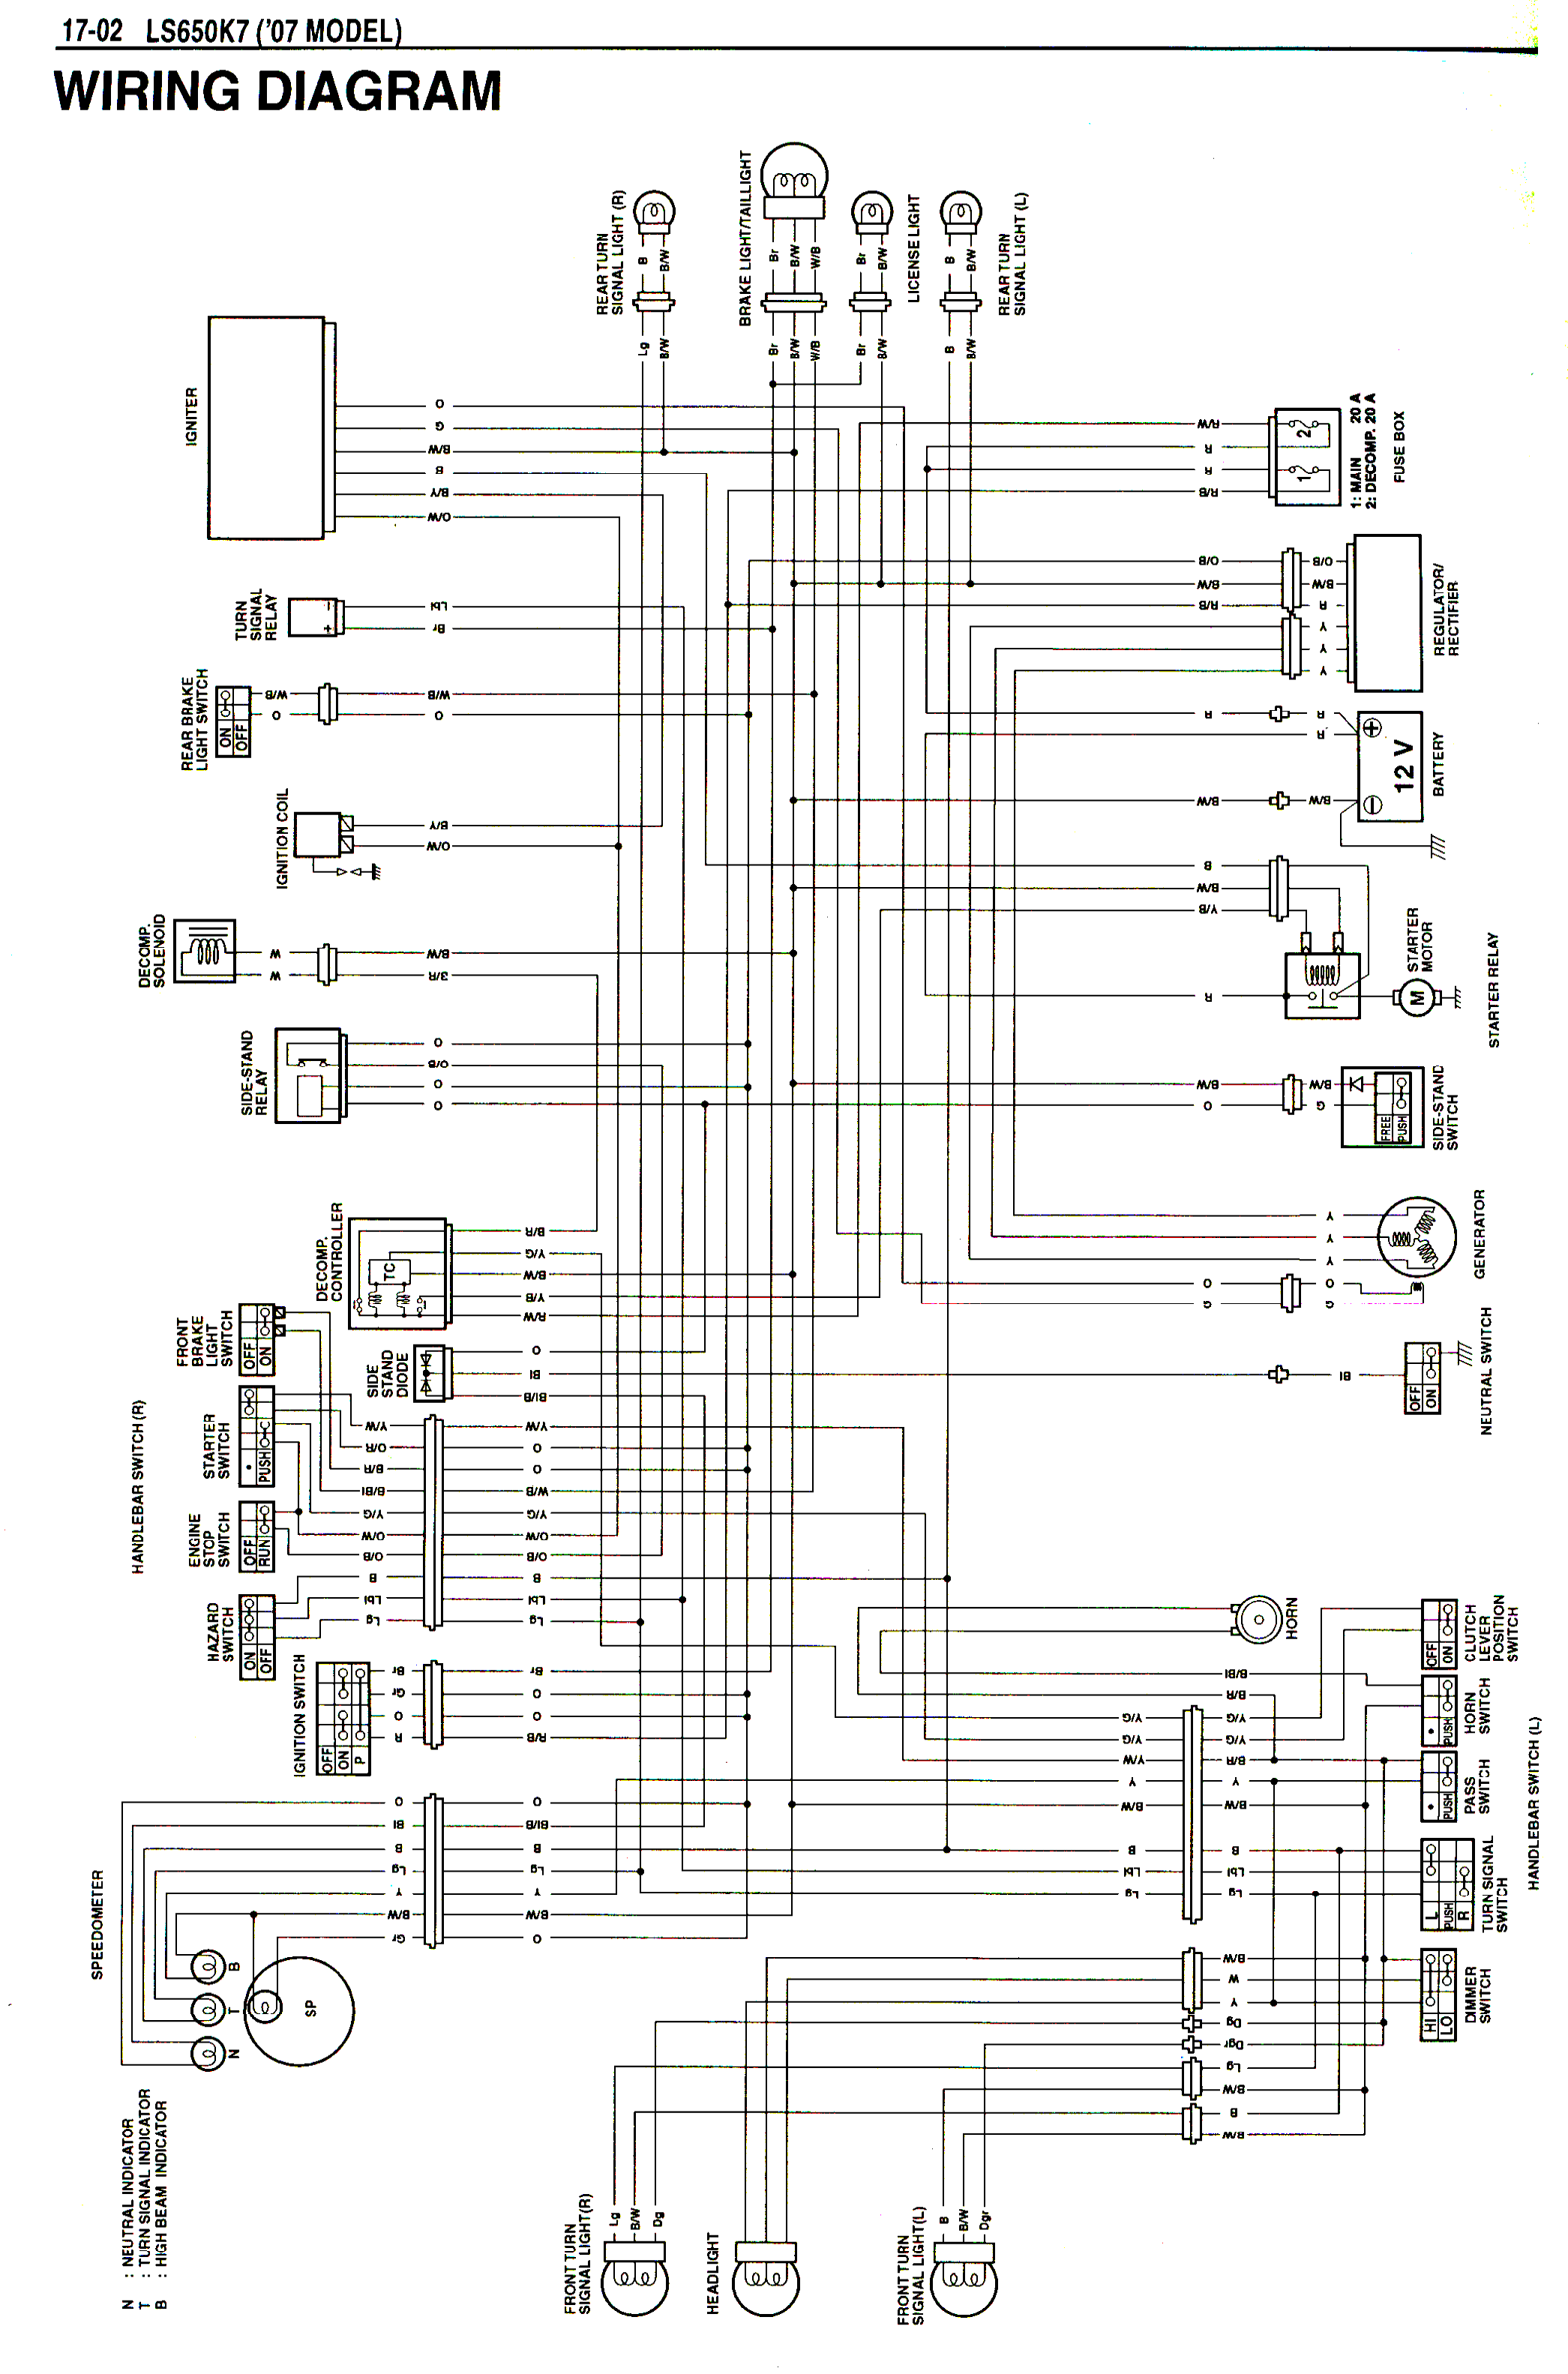 Suzuki Savage Ignitor Wiring Diagram from suzukisavage.com